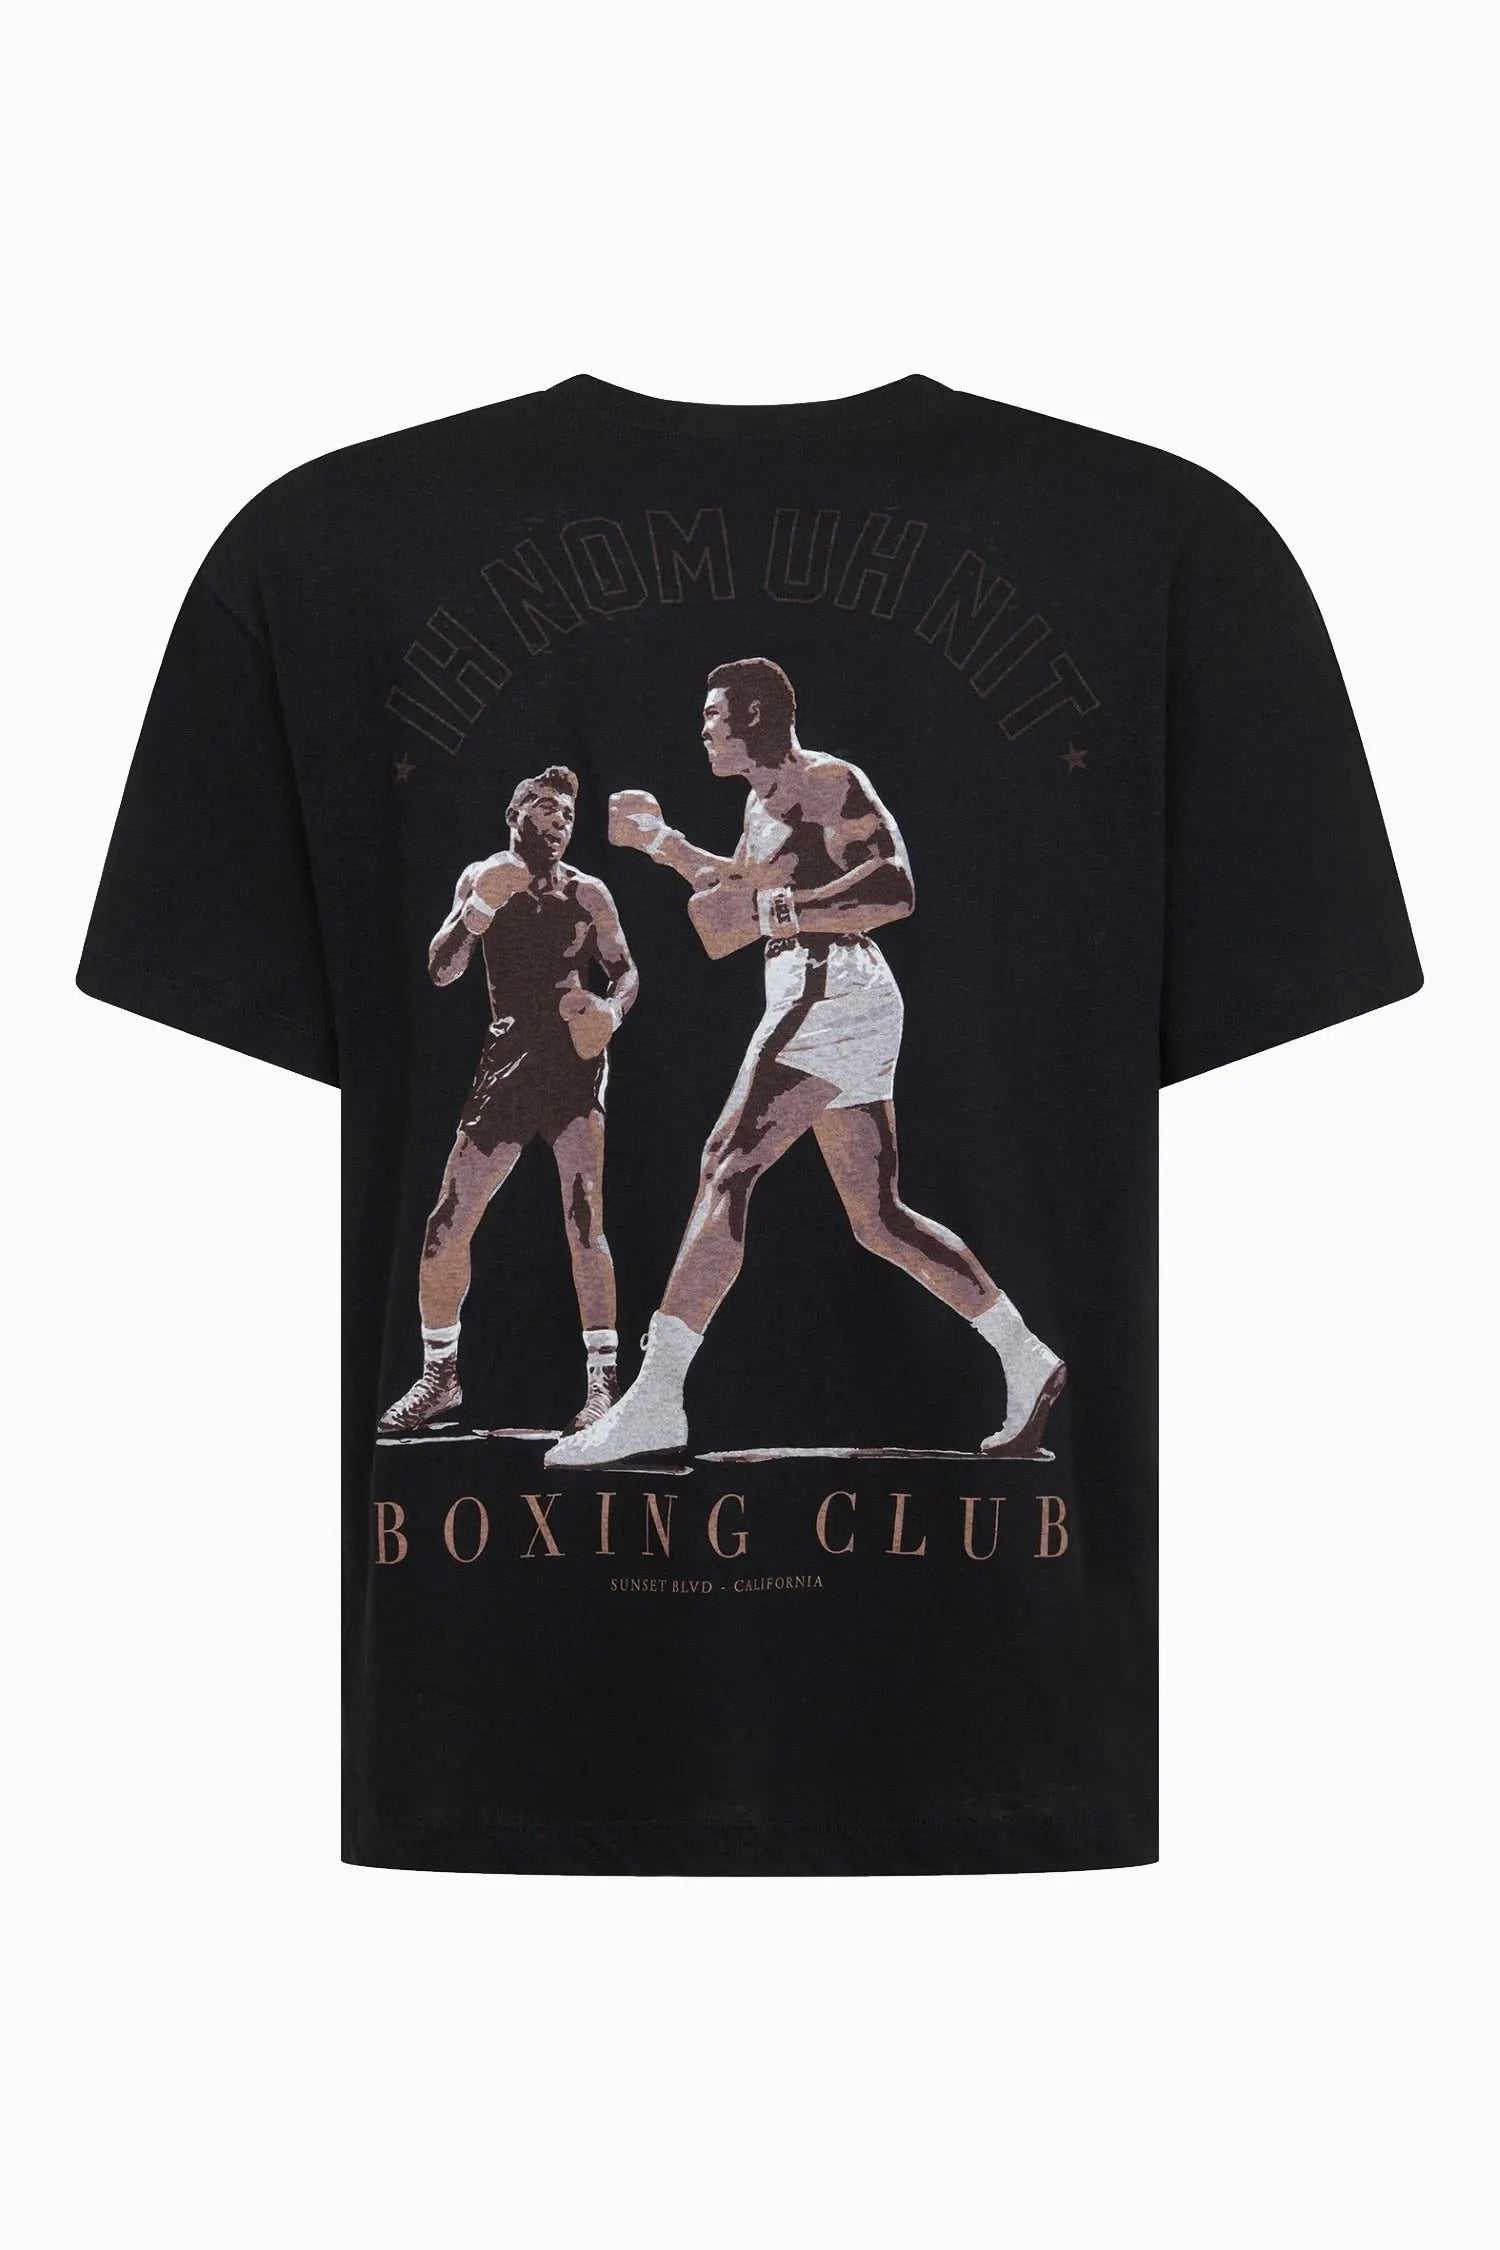 Boxing Fight Print T-Shirt - IH NOM UH NIT